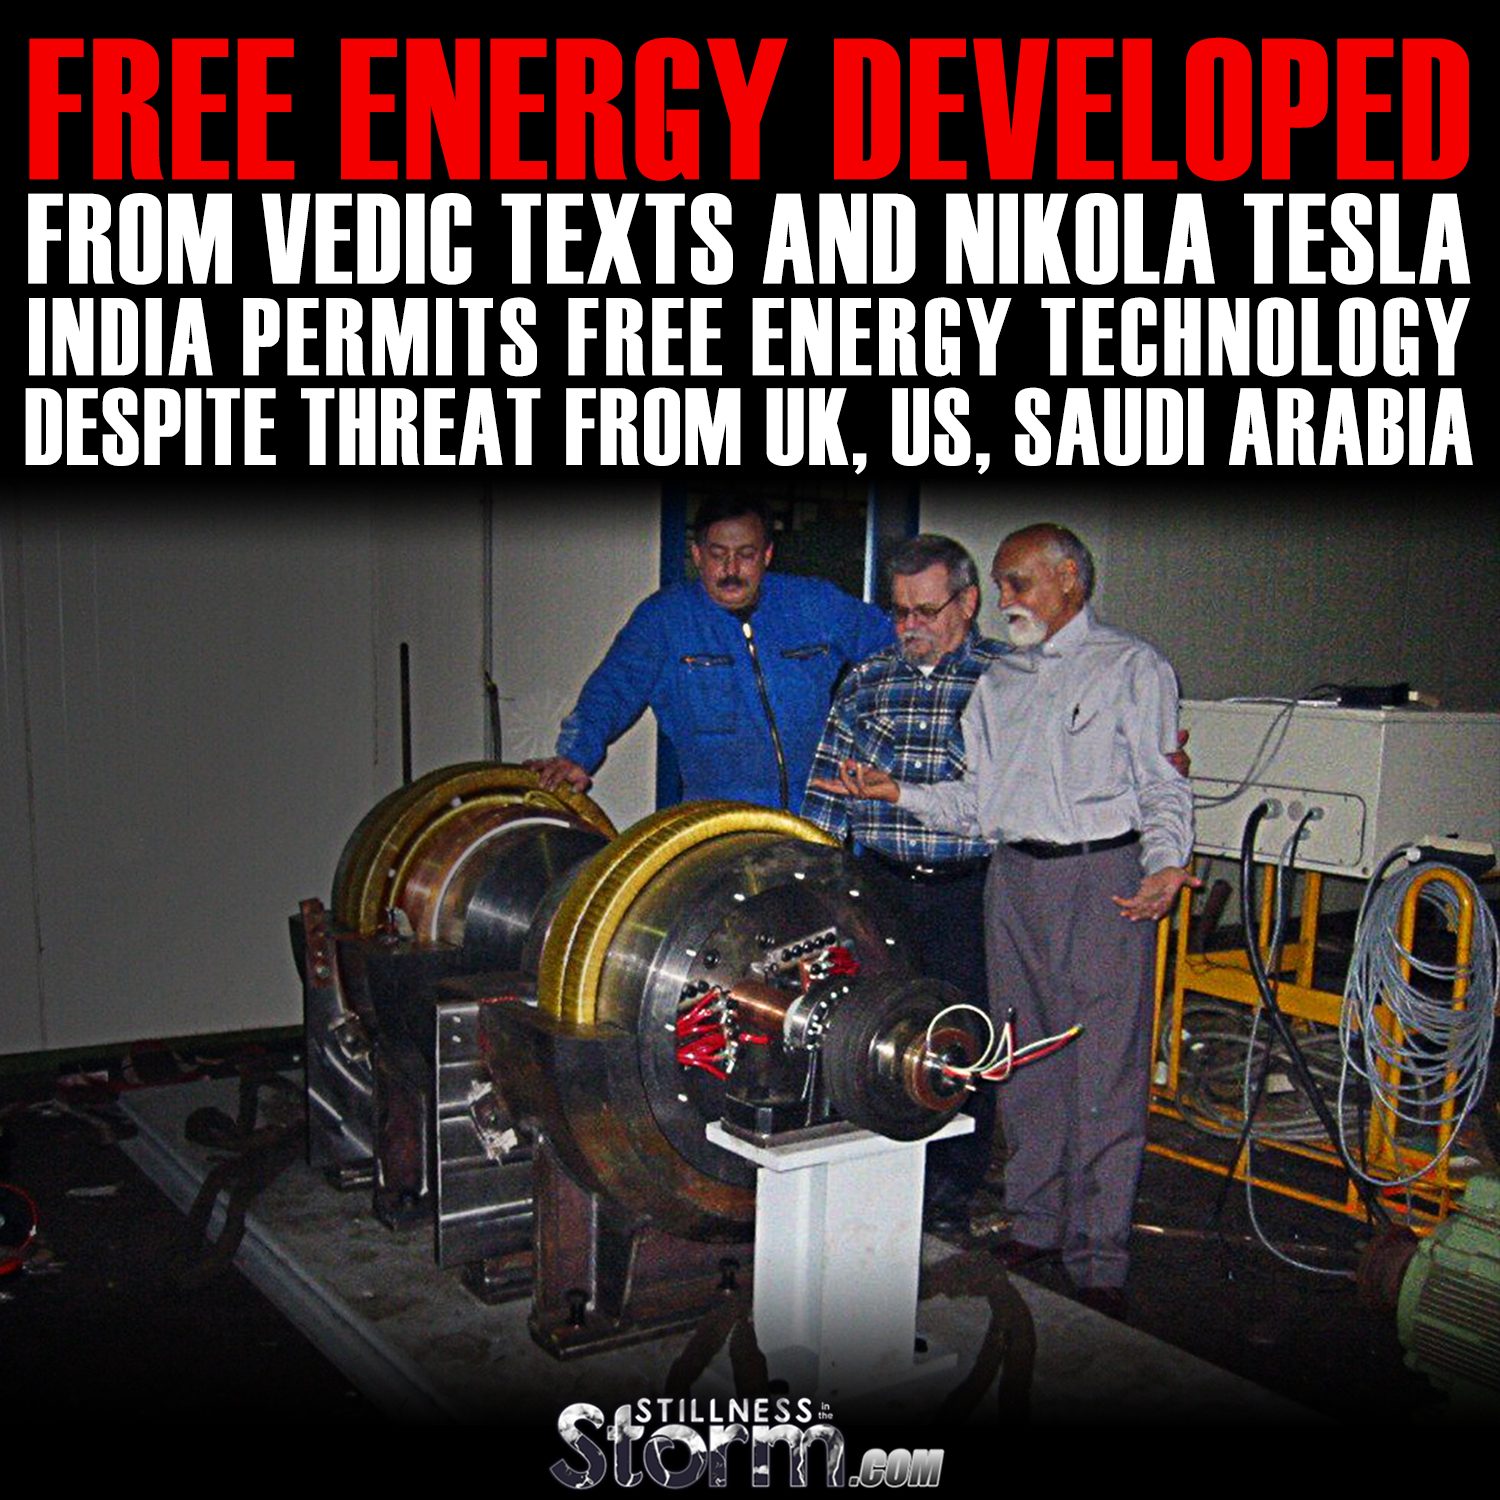 tesla-free-energy-developed-from-vedic-texts-and-nikola-tesla-india-permits-free-energy-technology-despite-threat-from-uk-us-saudi